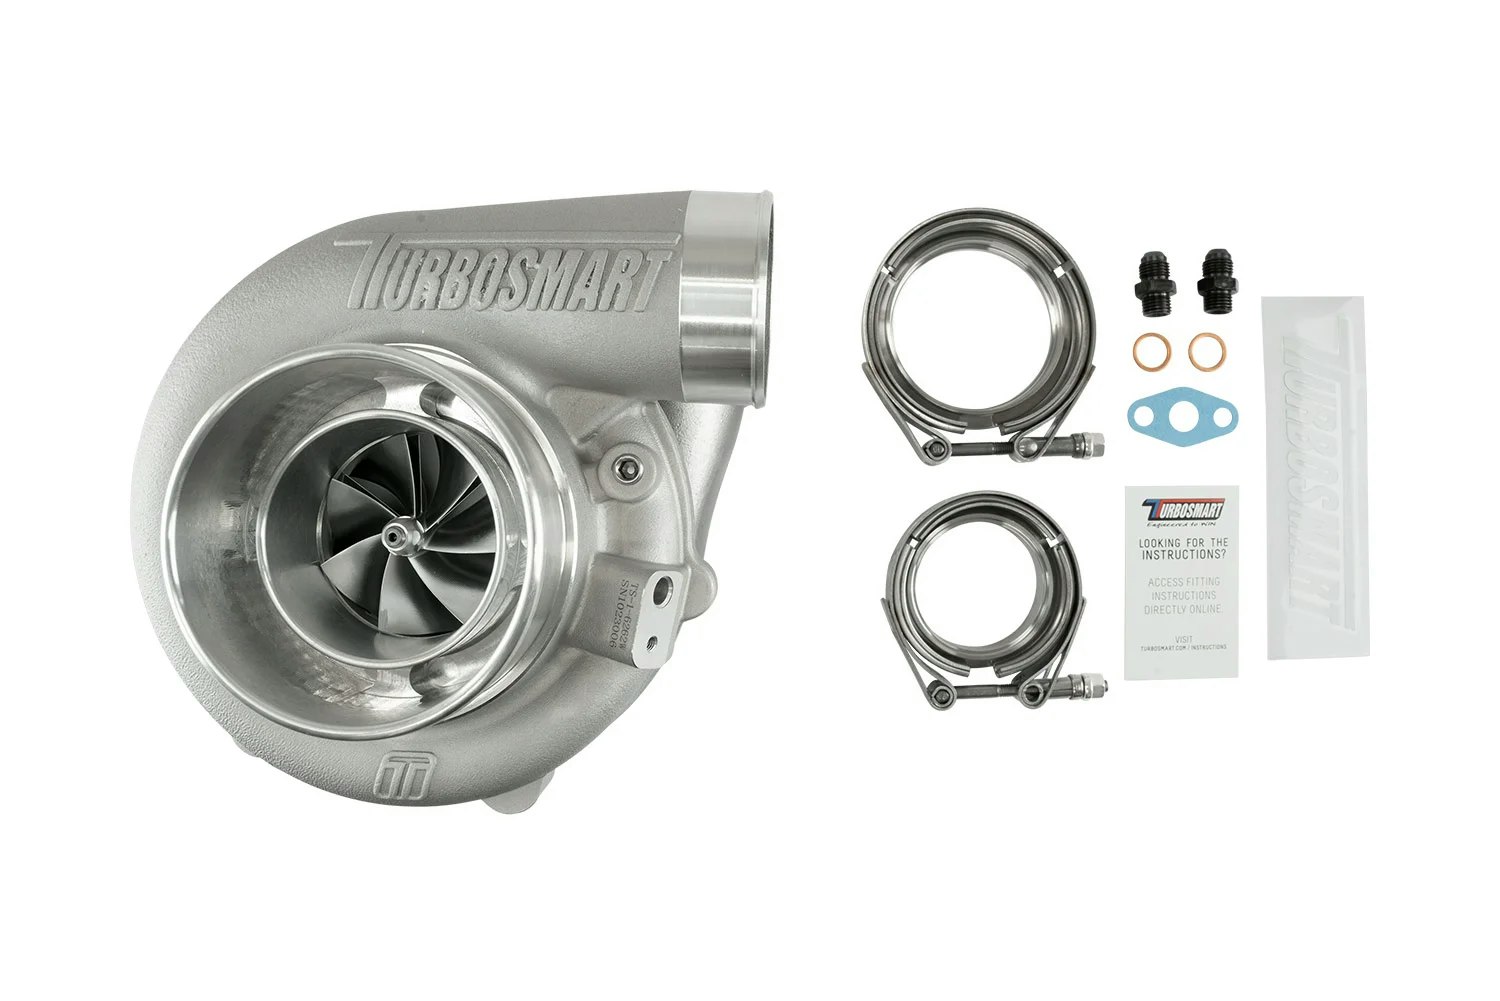 Turbosmart turbocharger 6466 V-Band/V-Band A/R 0,82